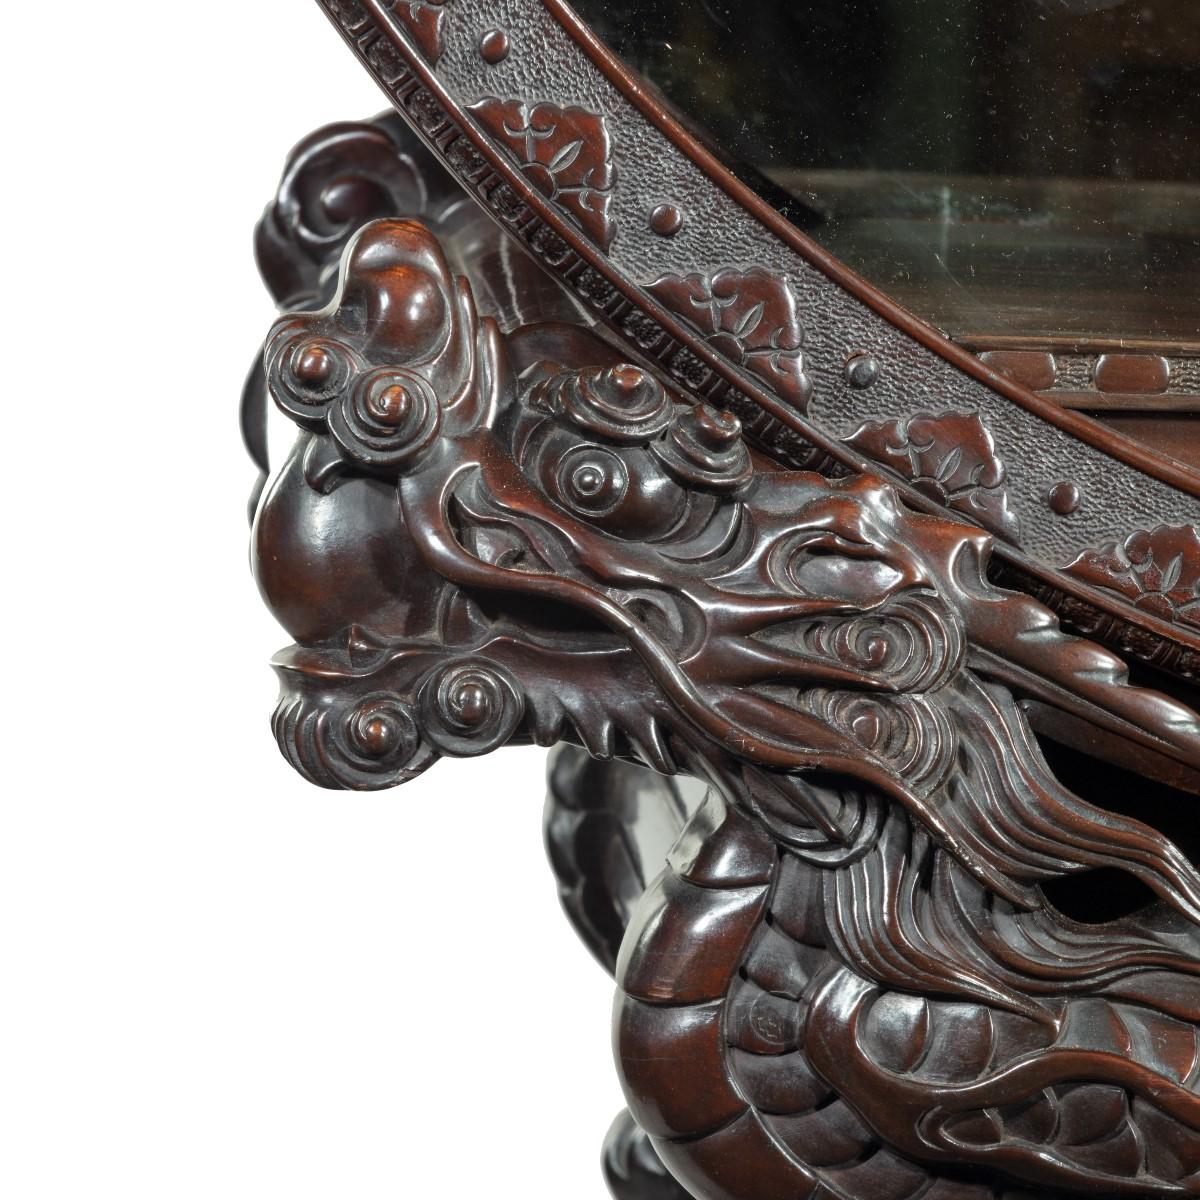 A Meiji period carved hardwood circular display cabinet